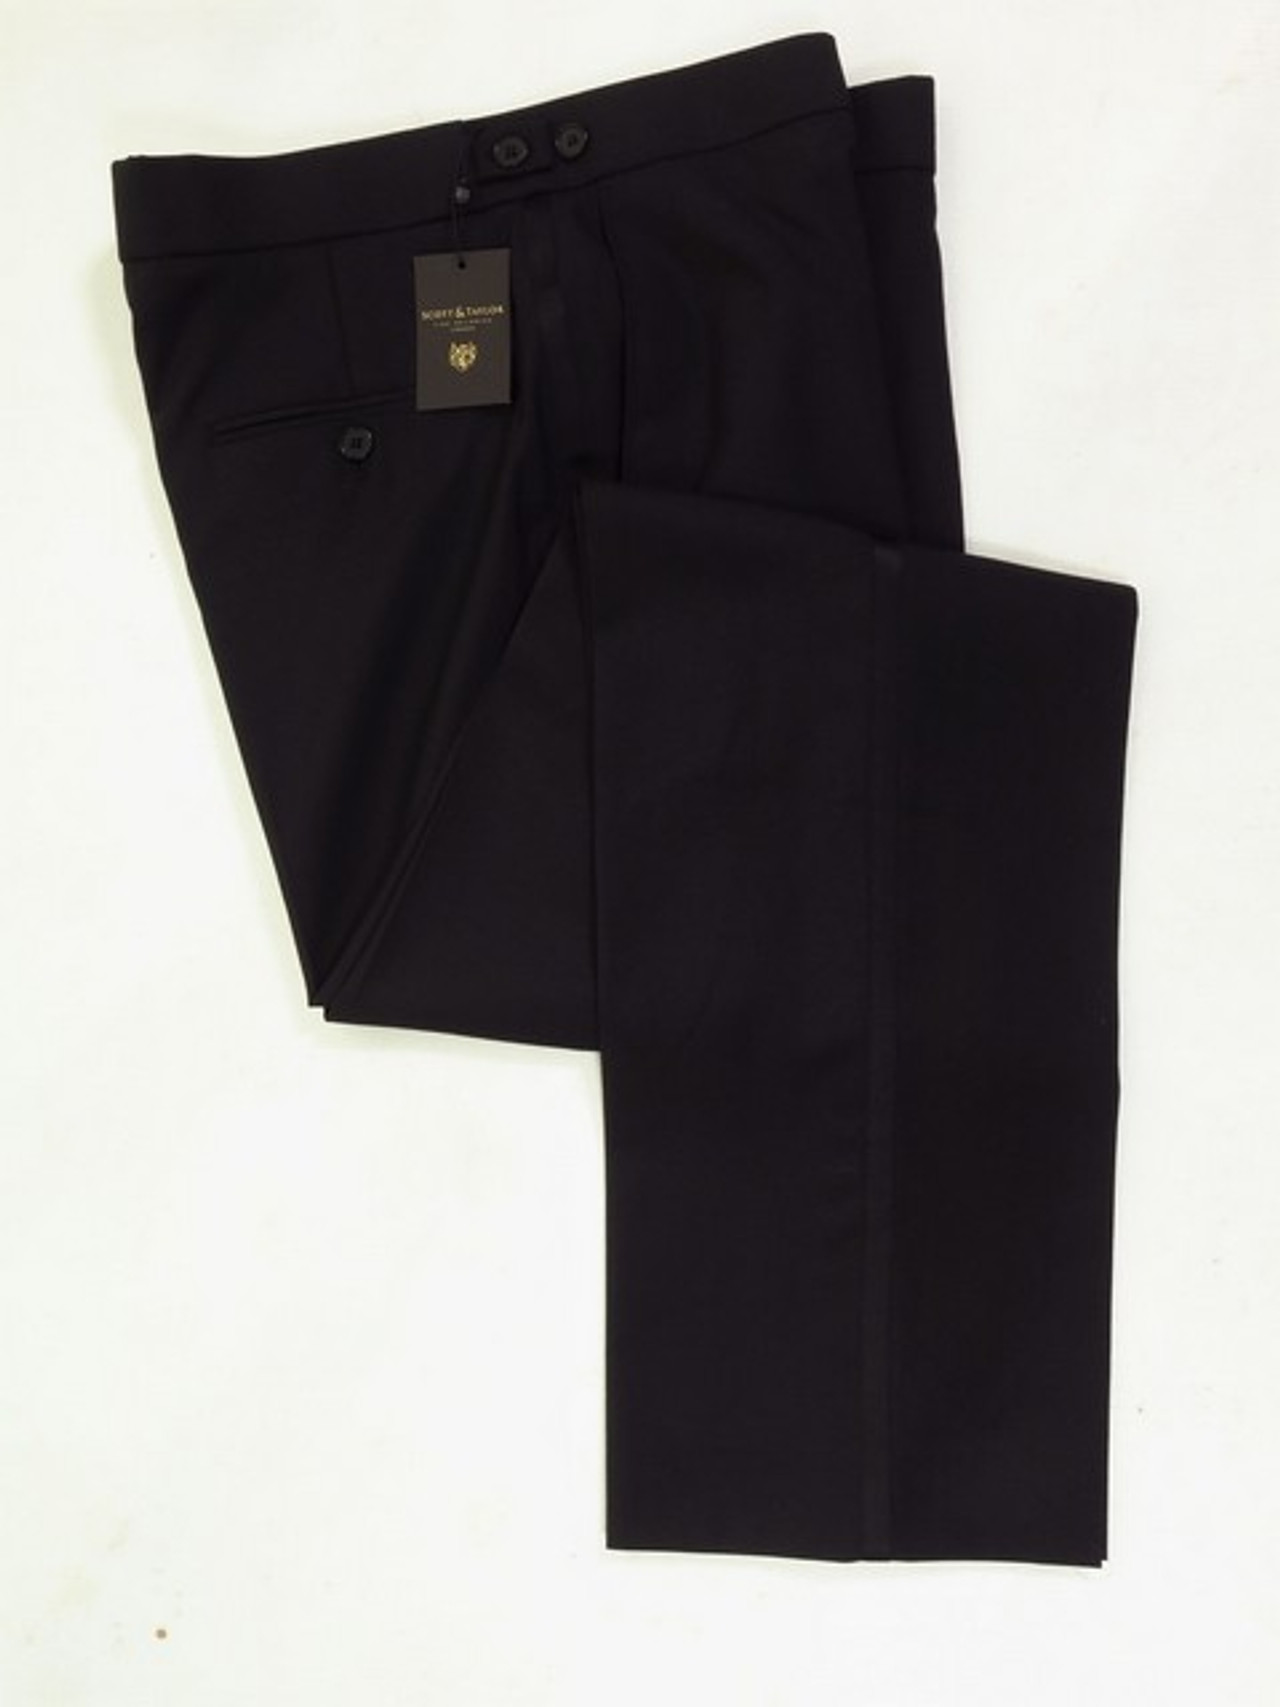 Men's Black Dinner Suit Tuxedo Trousers NEW £24.99 - Tweedmans